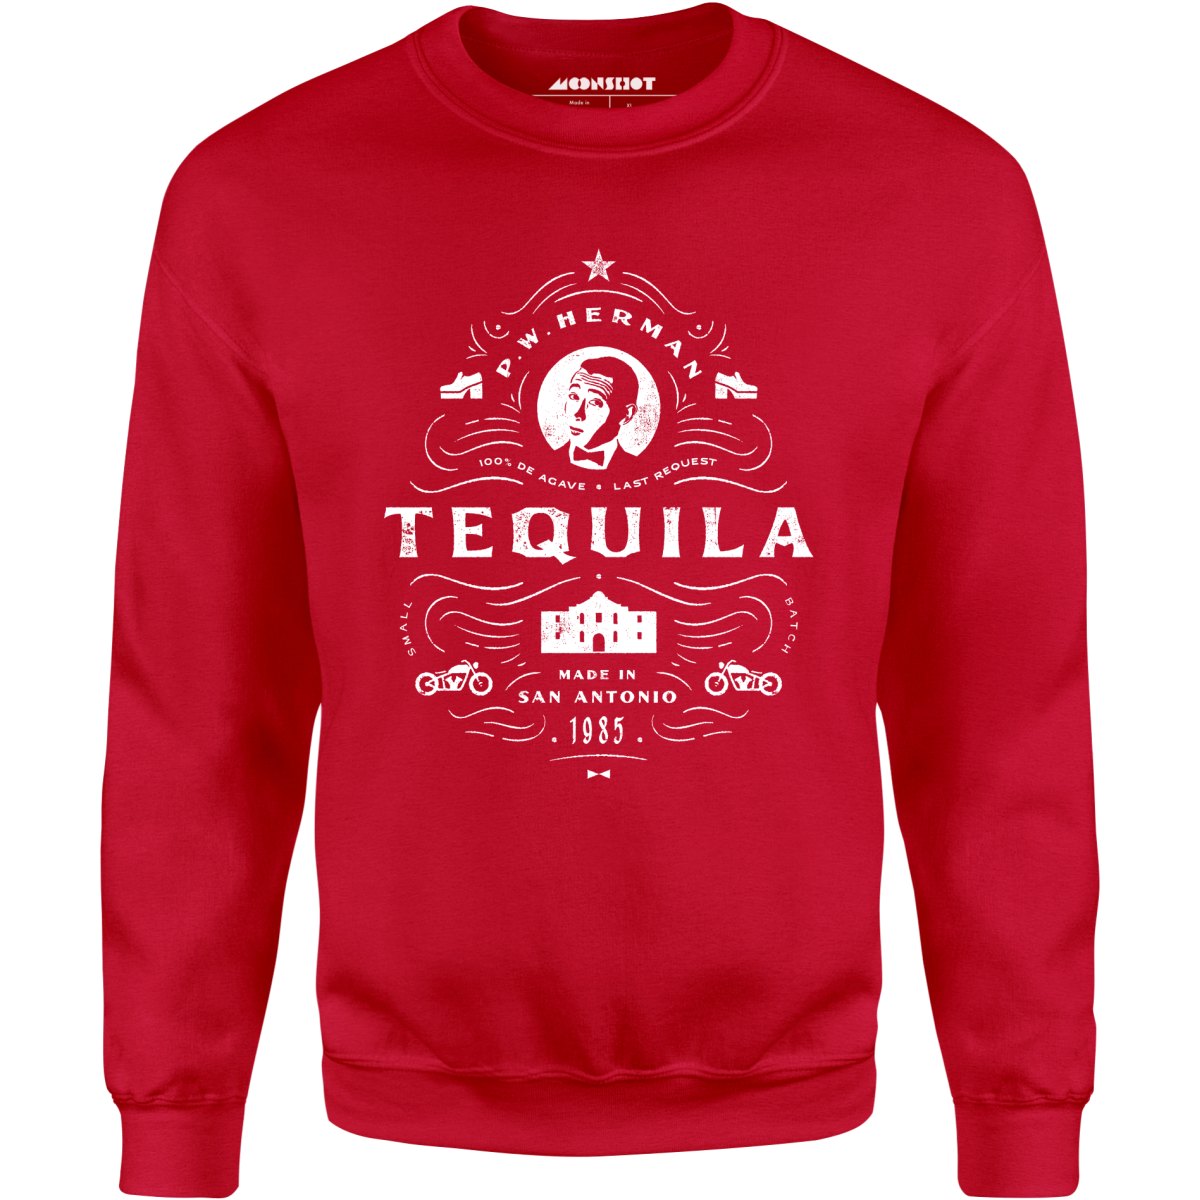 P.W. Herman Brand Tequila - Unisex Sweatshirt